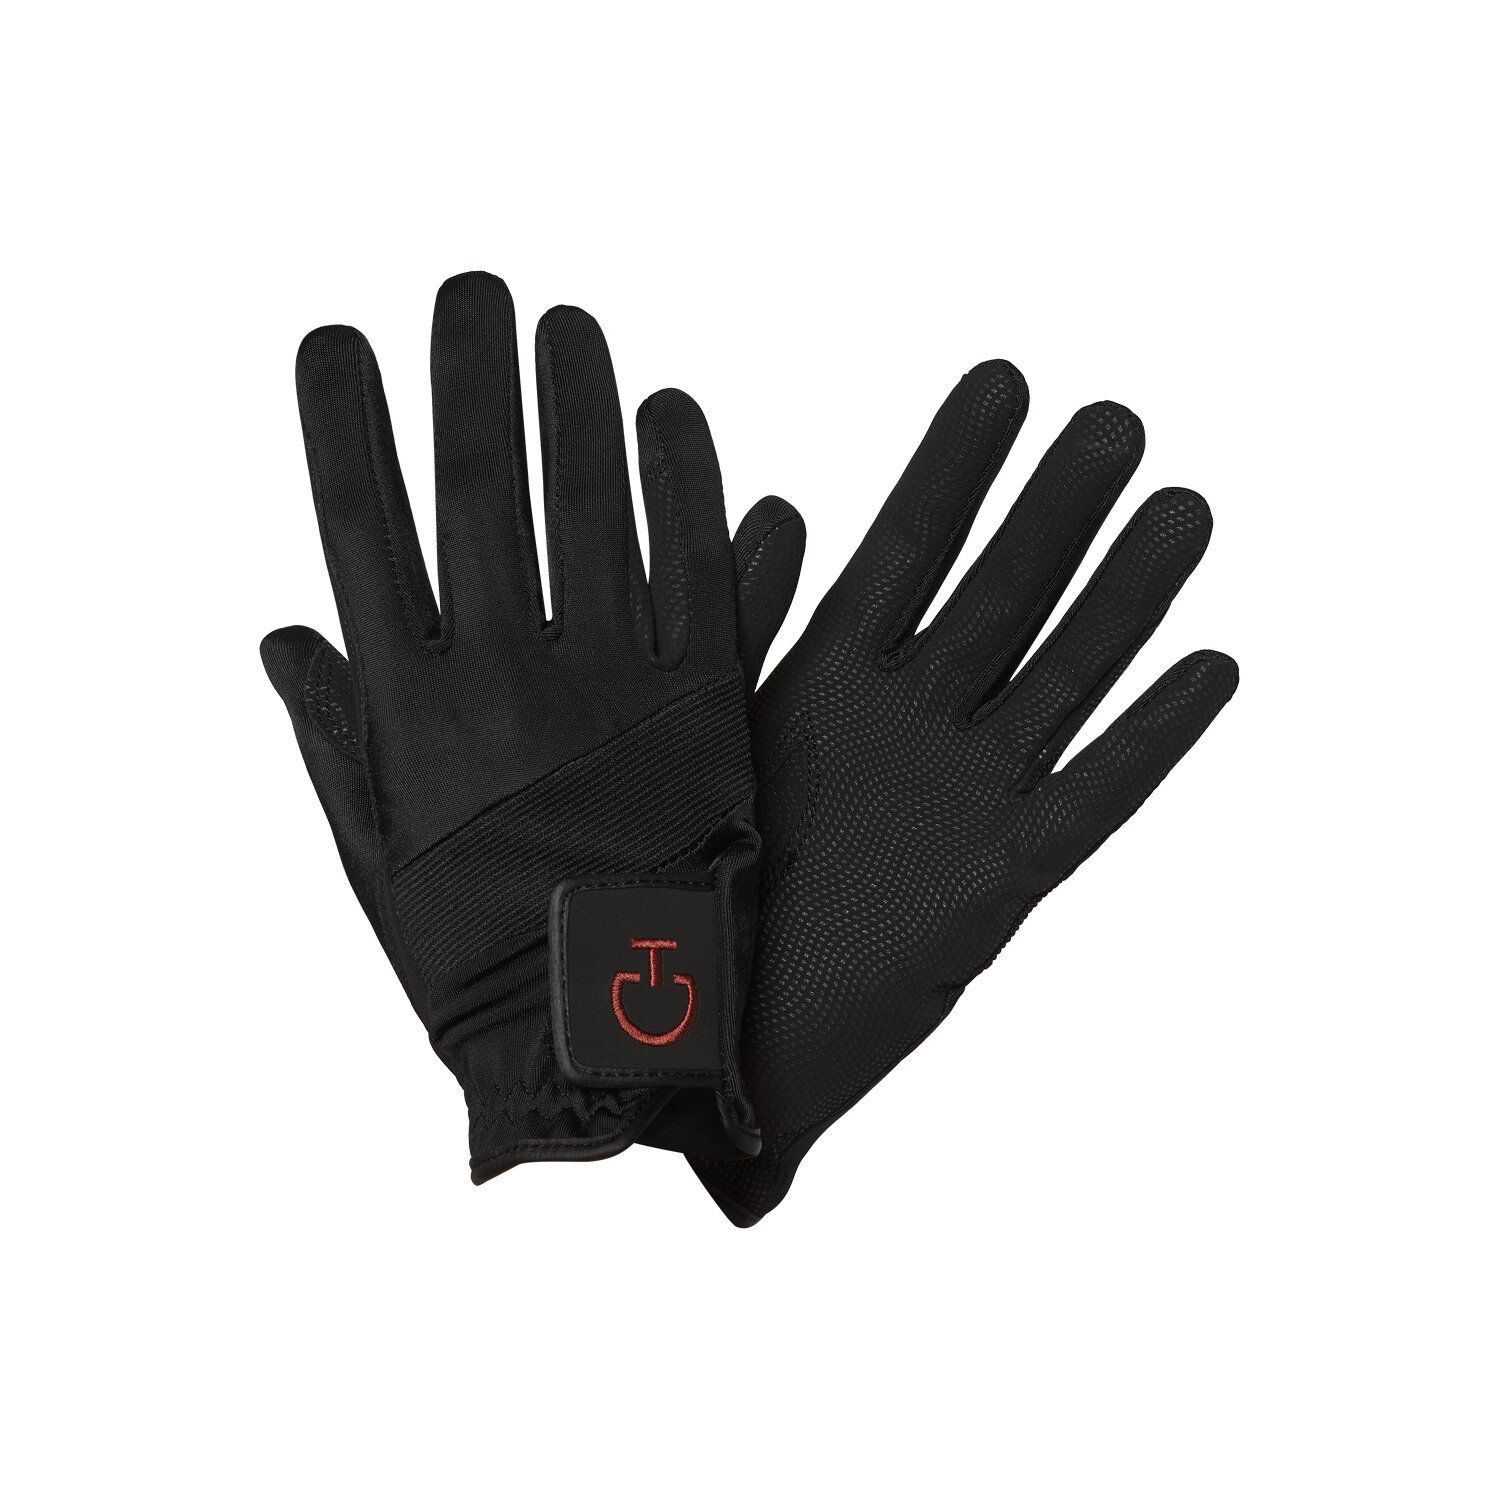 Cavalleria Toscana Technical gloves BLACK-3